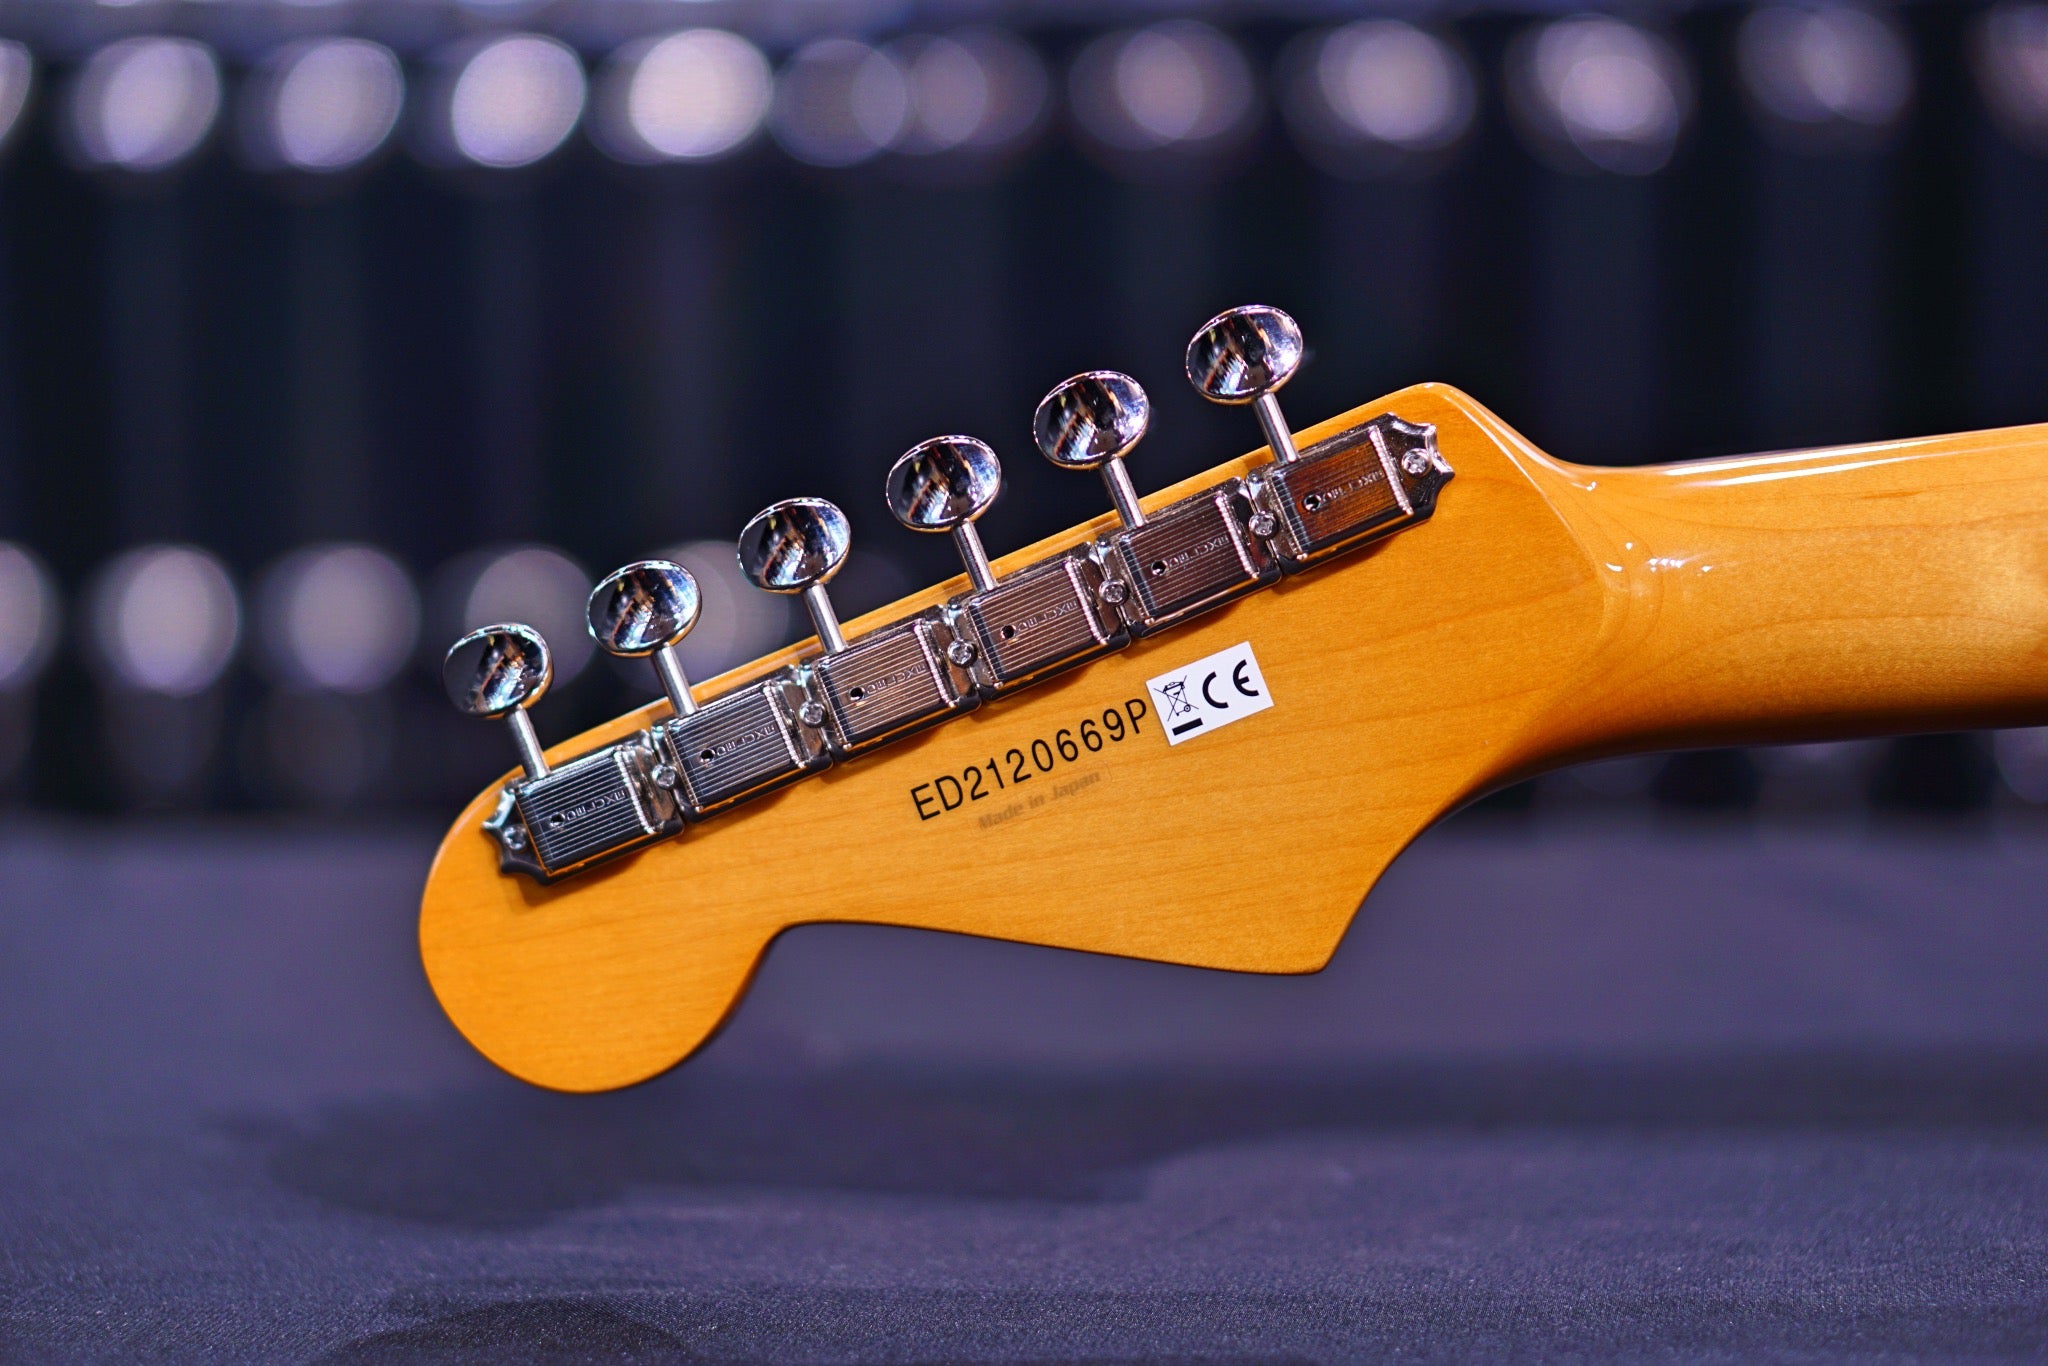 ESP Edwards E-ST-125ALPF 3 tone sunburst ED2120669P - HIENDGUITAR   EDWARDS guitar